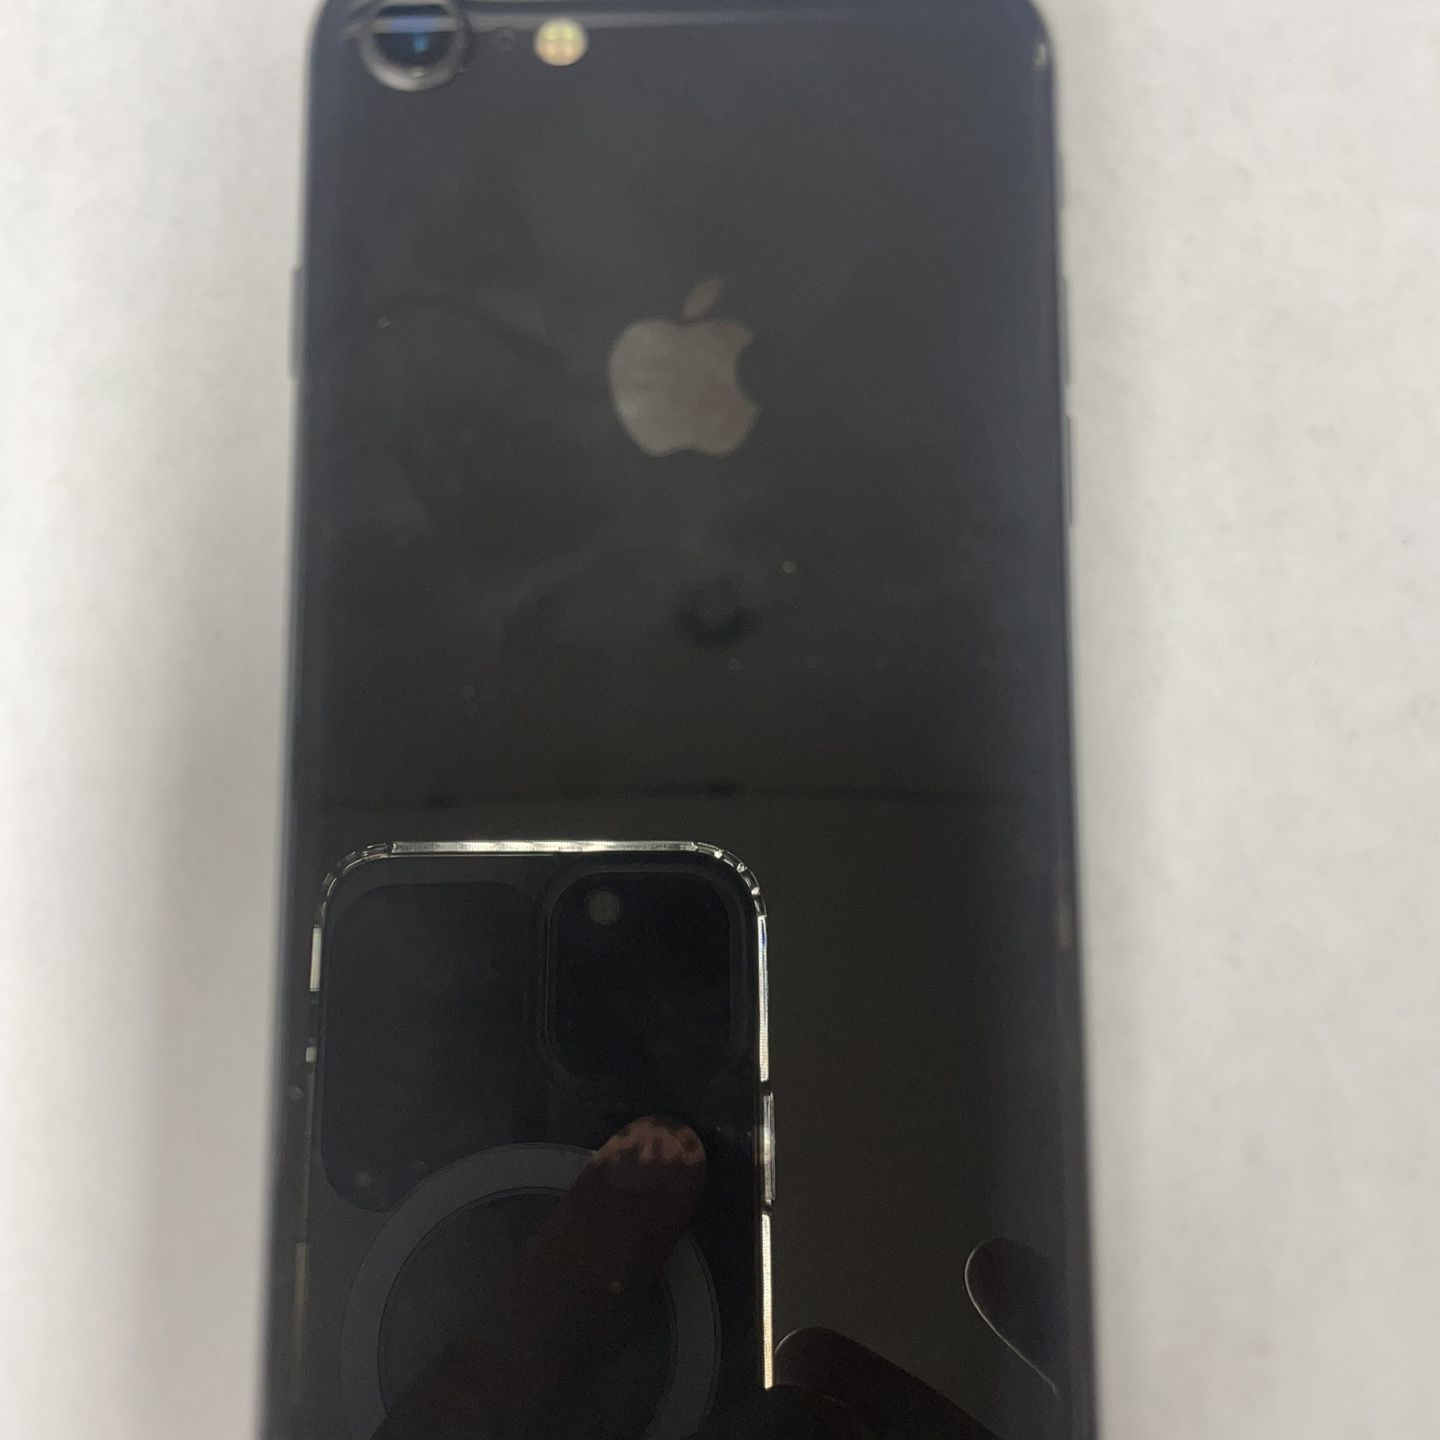 apple iphone 8 unlocked cell phone 64gb